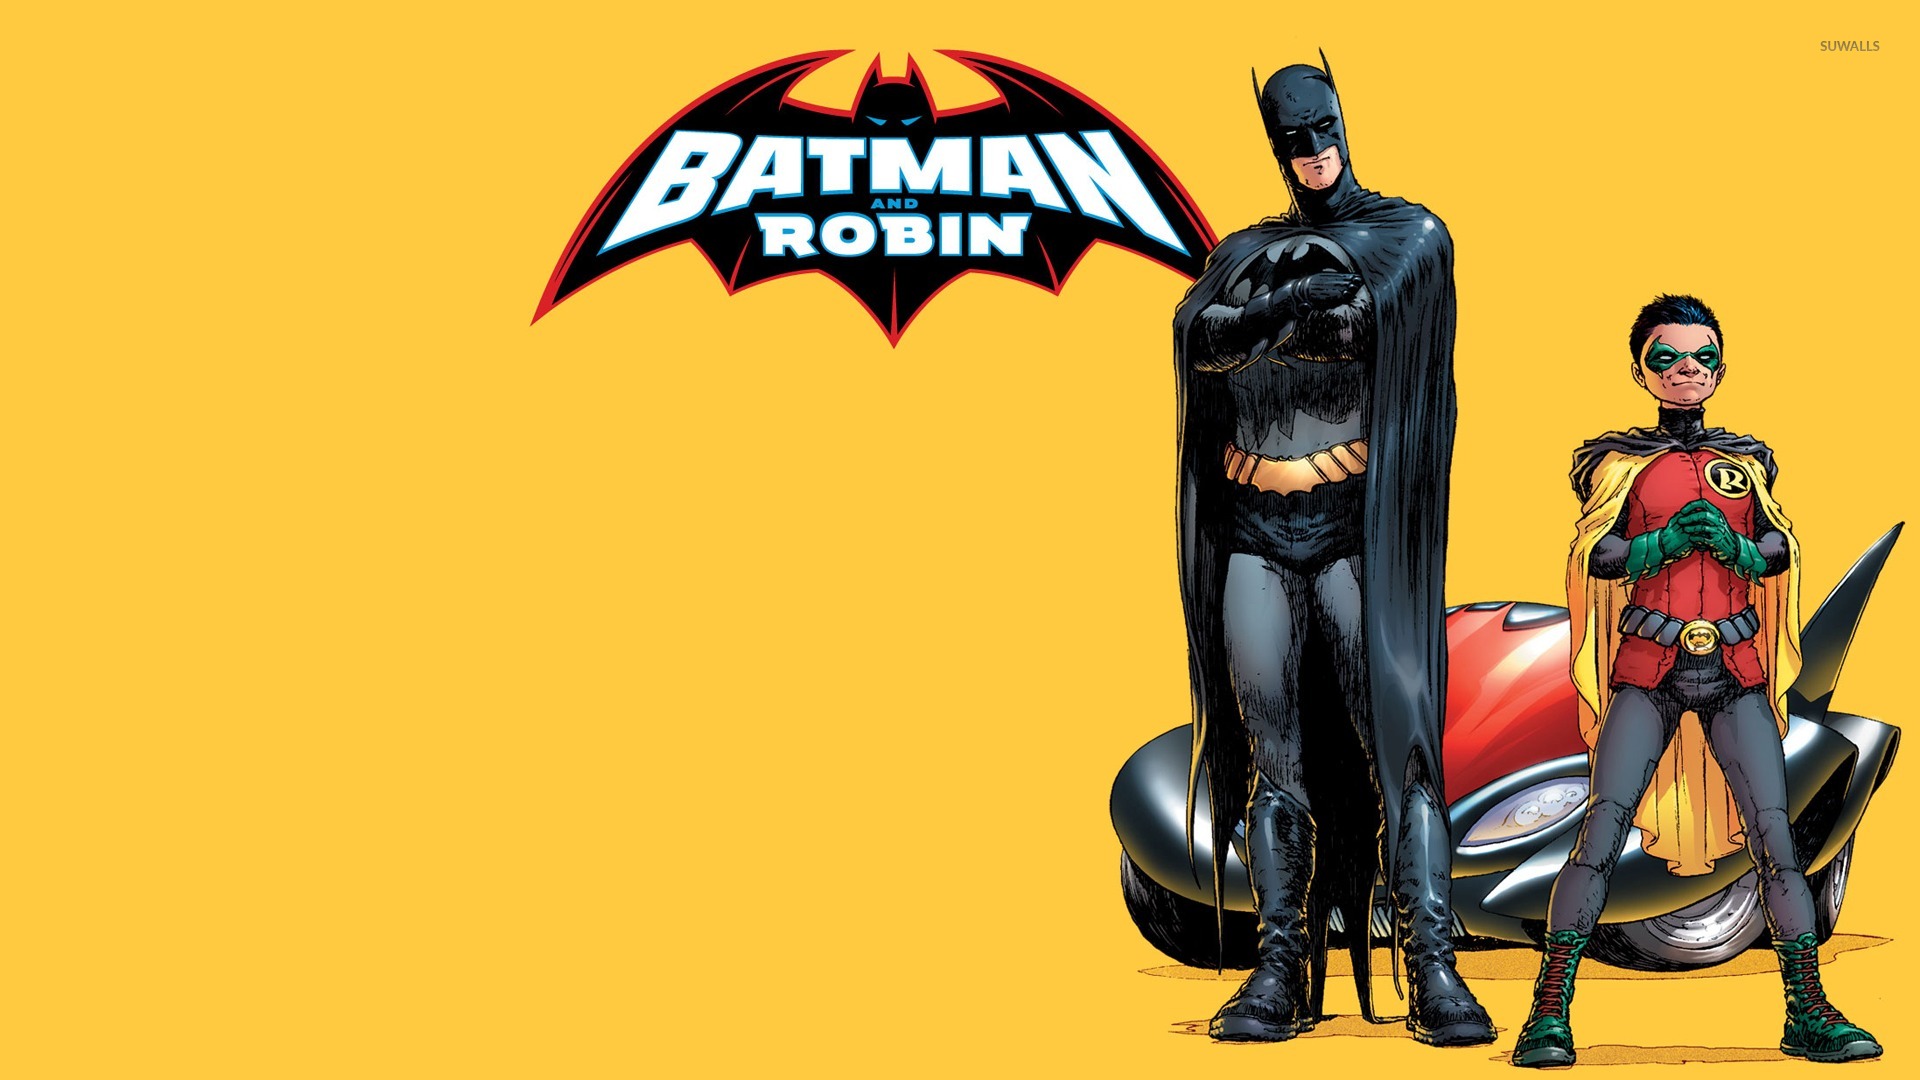 Batman and Robin wallpaper - Comic wallpapers - #49123